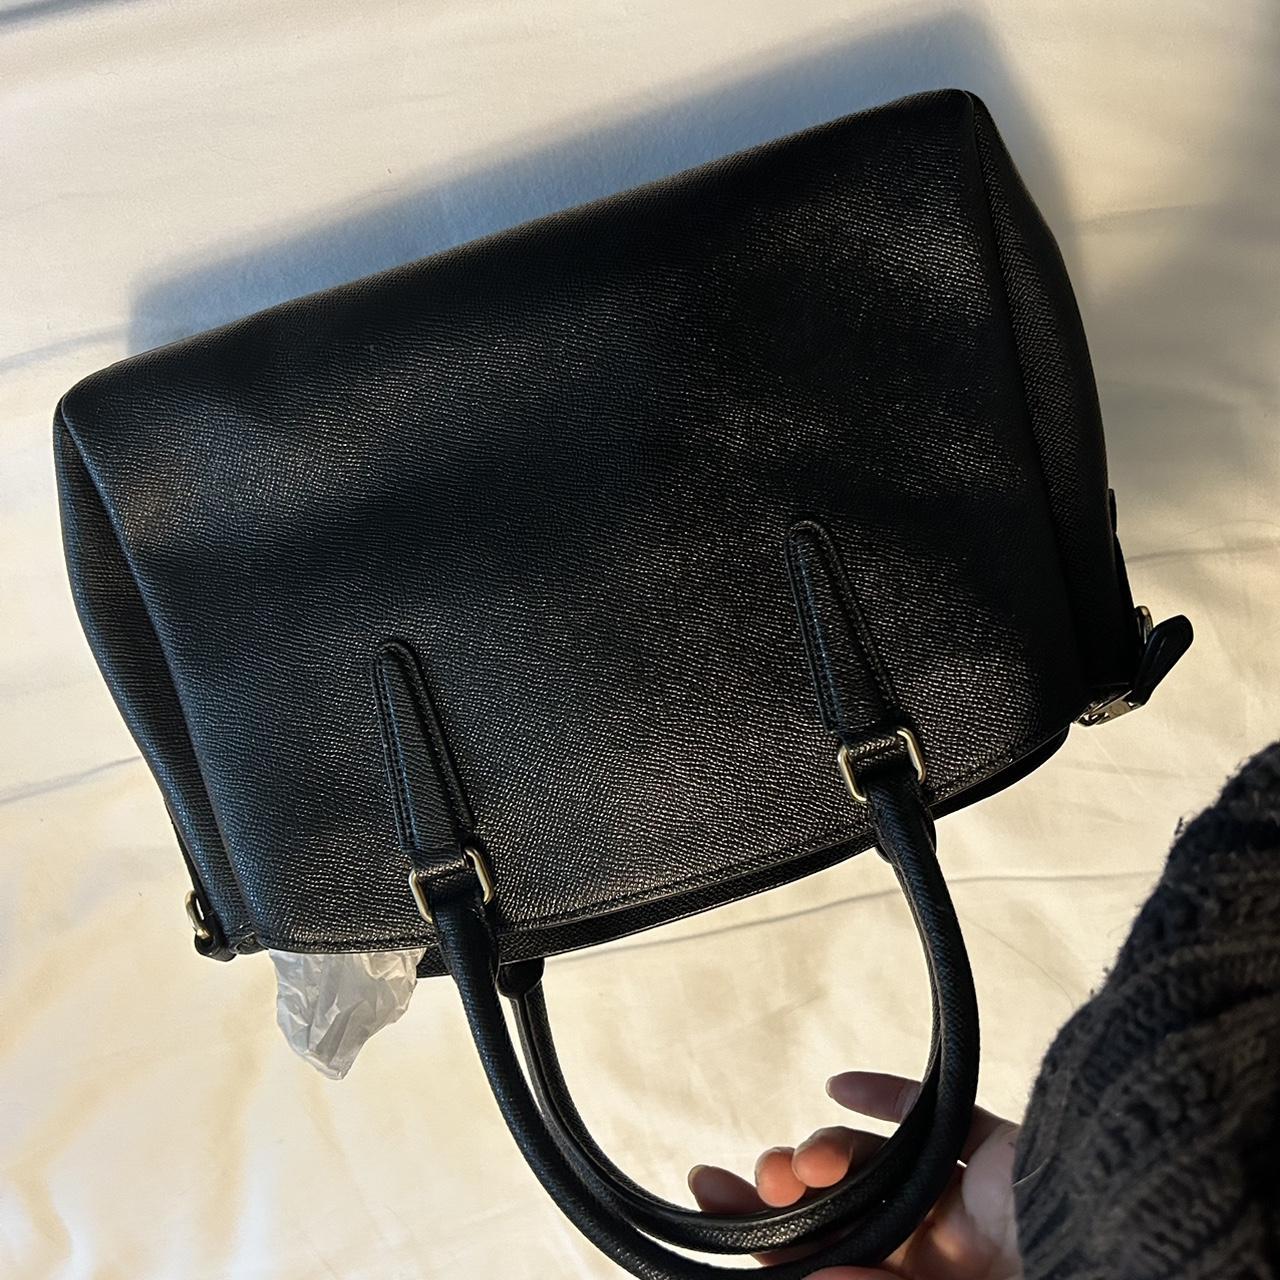 Coach handbag brand new never used. Lost the strap,... - Depop